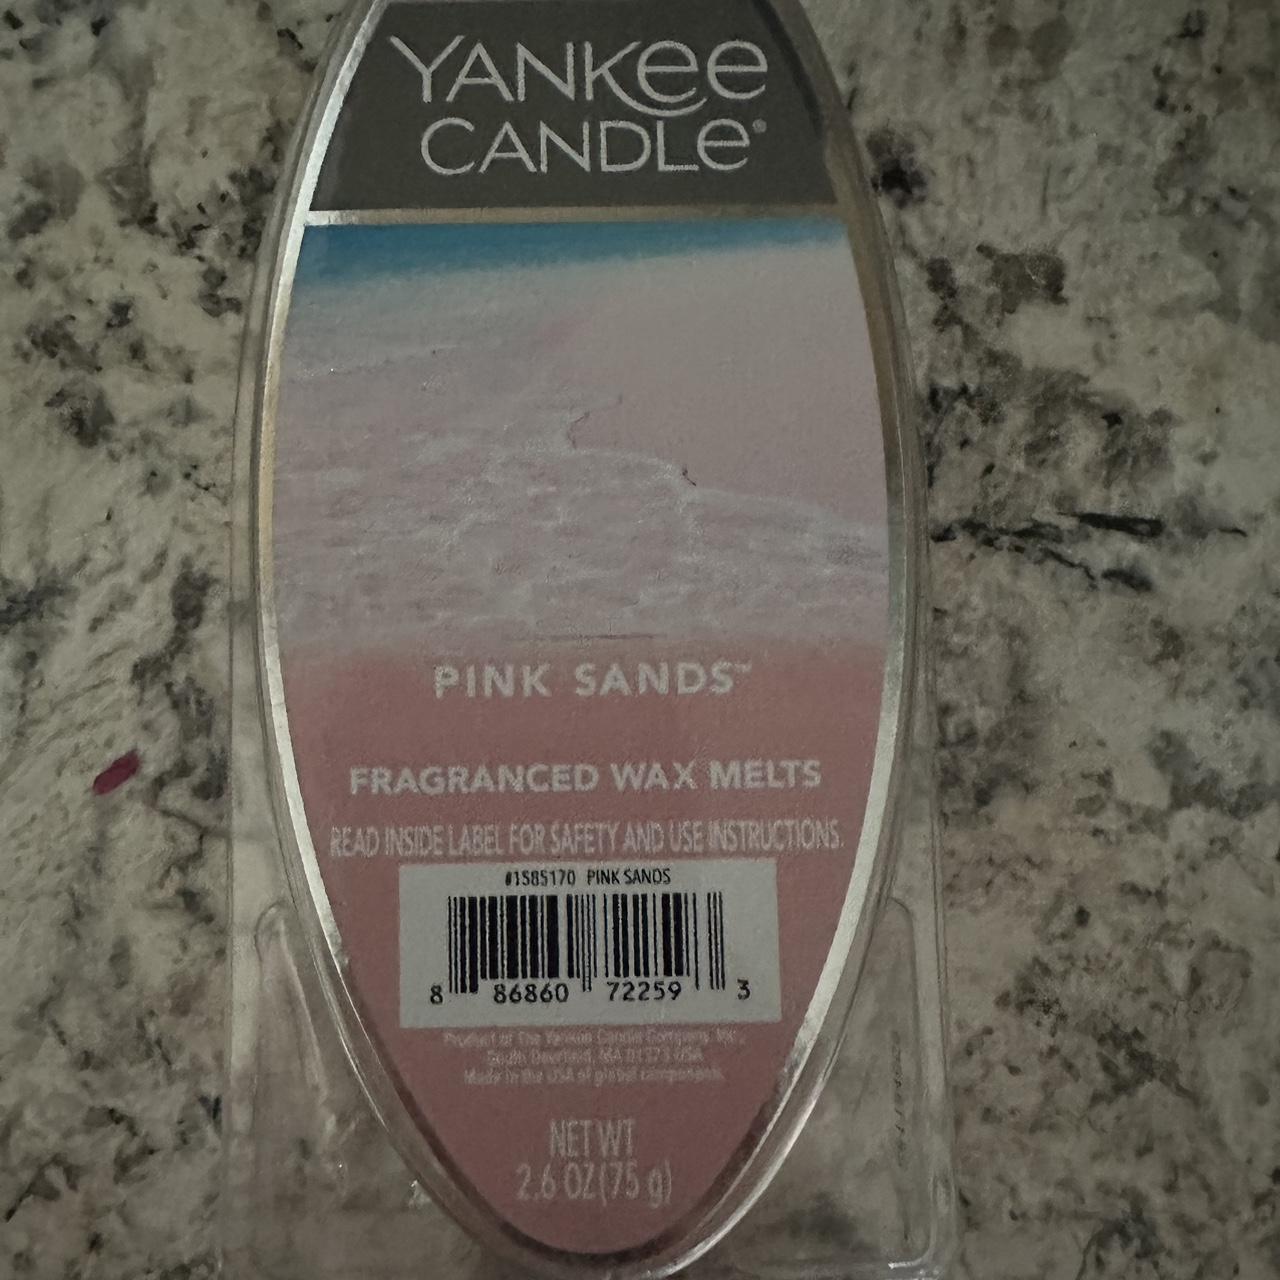 BNIB Yankee Candle Pink Sands wax melts. Price